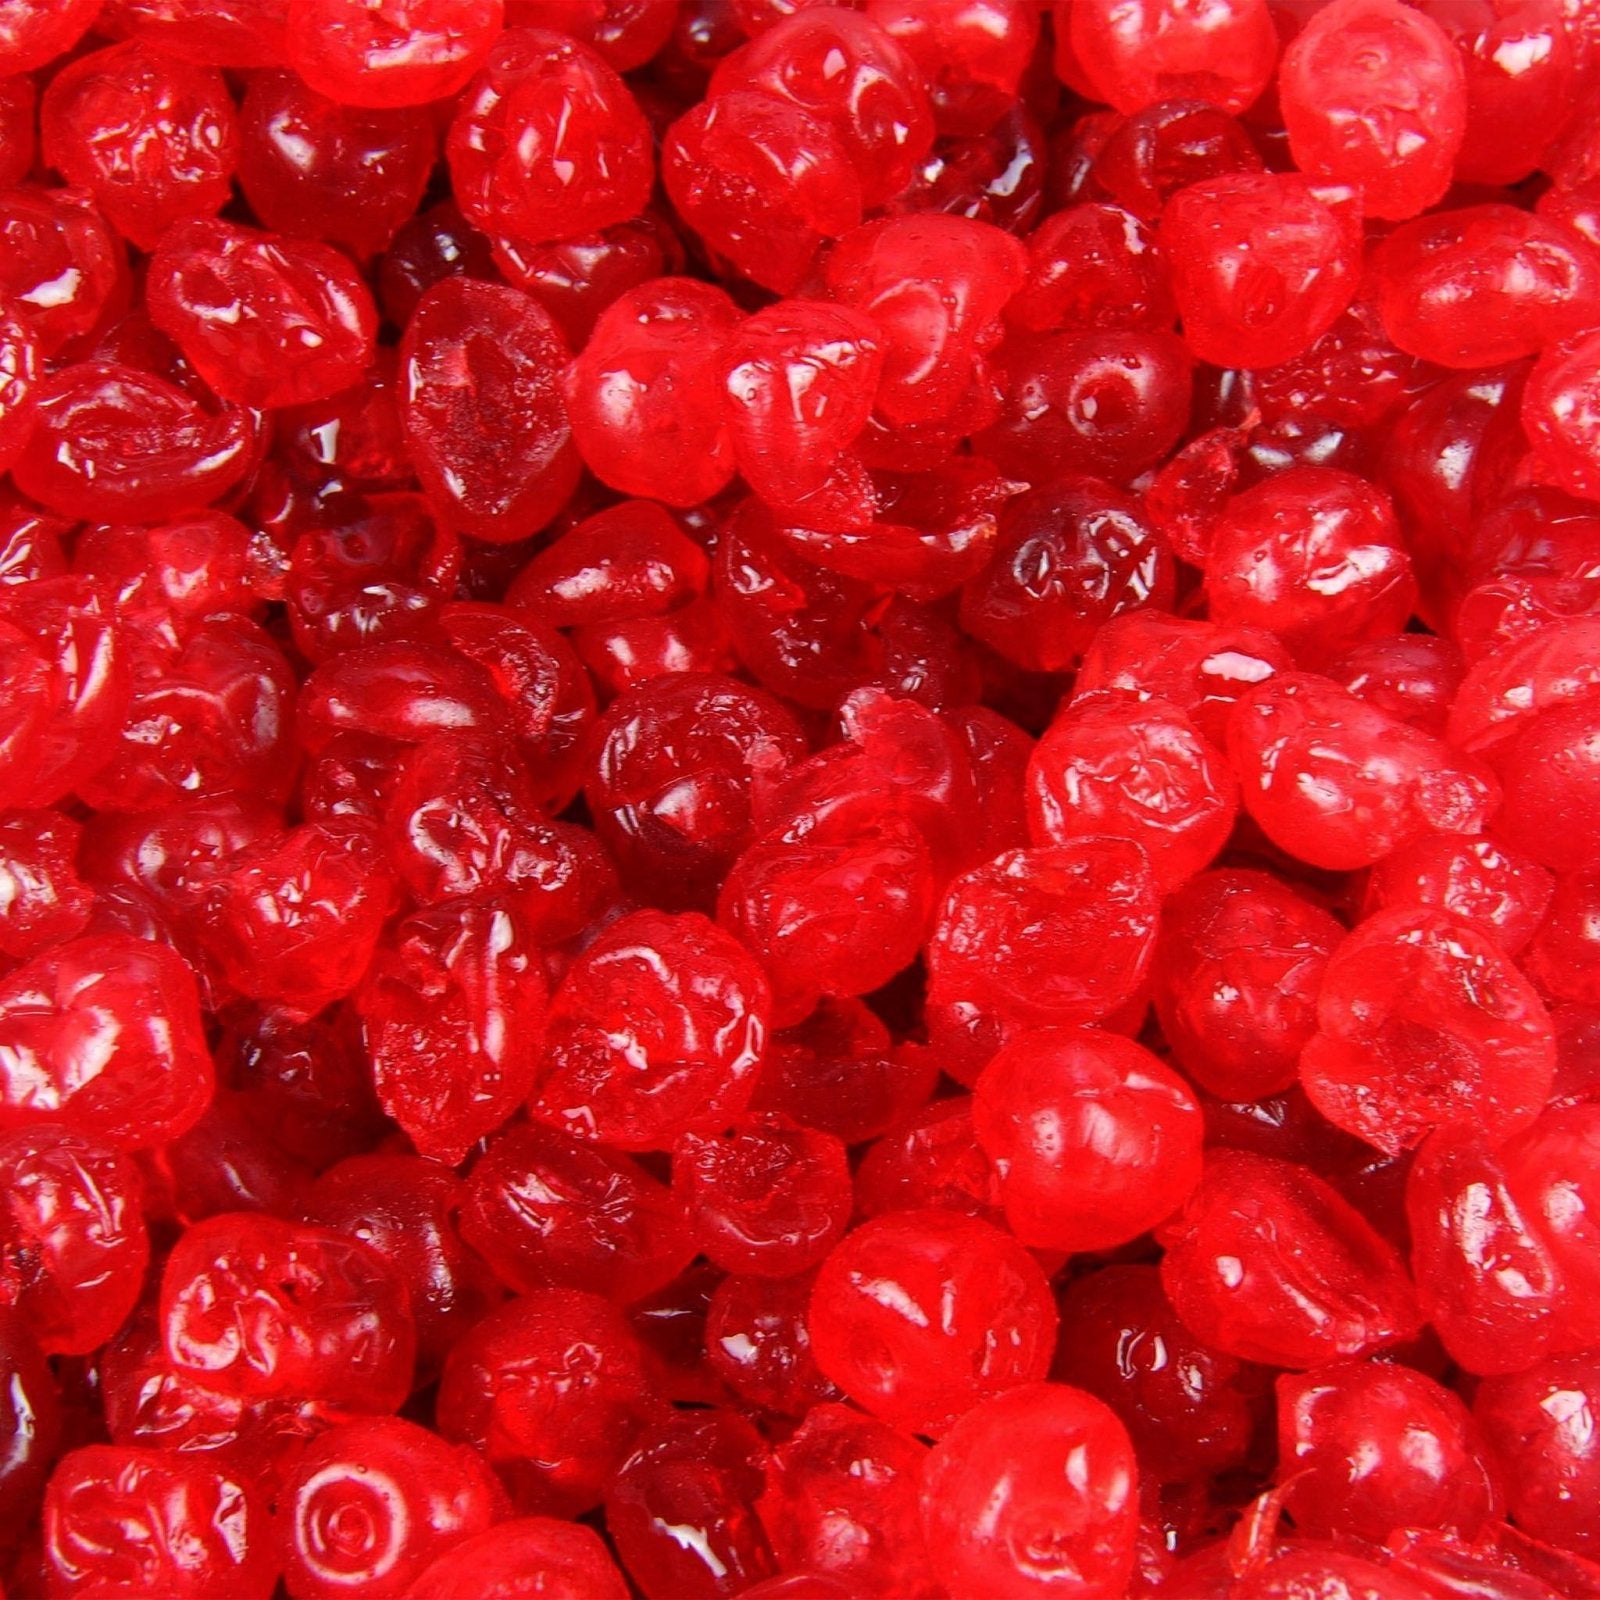 Red Cherries (whole / broken) (500g) - The Deli